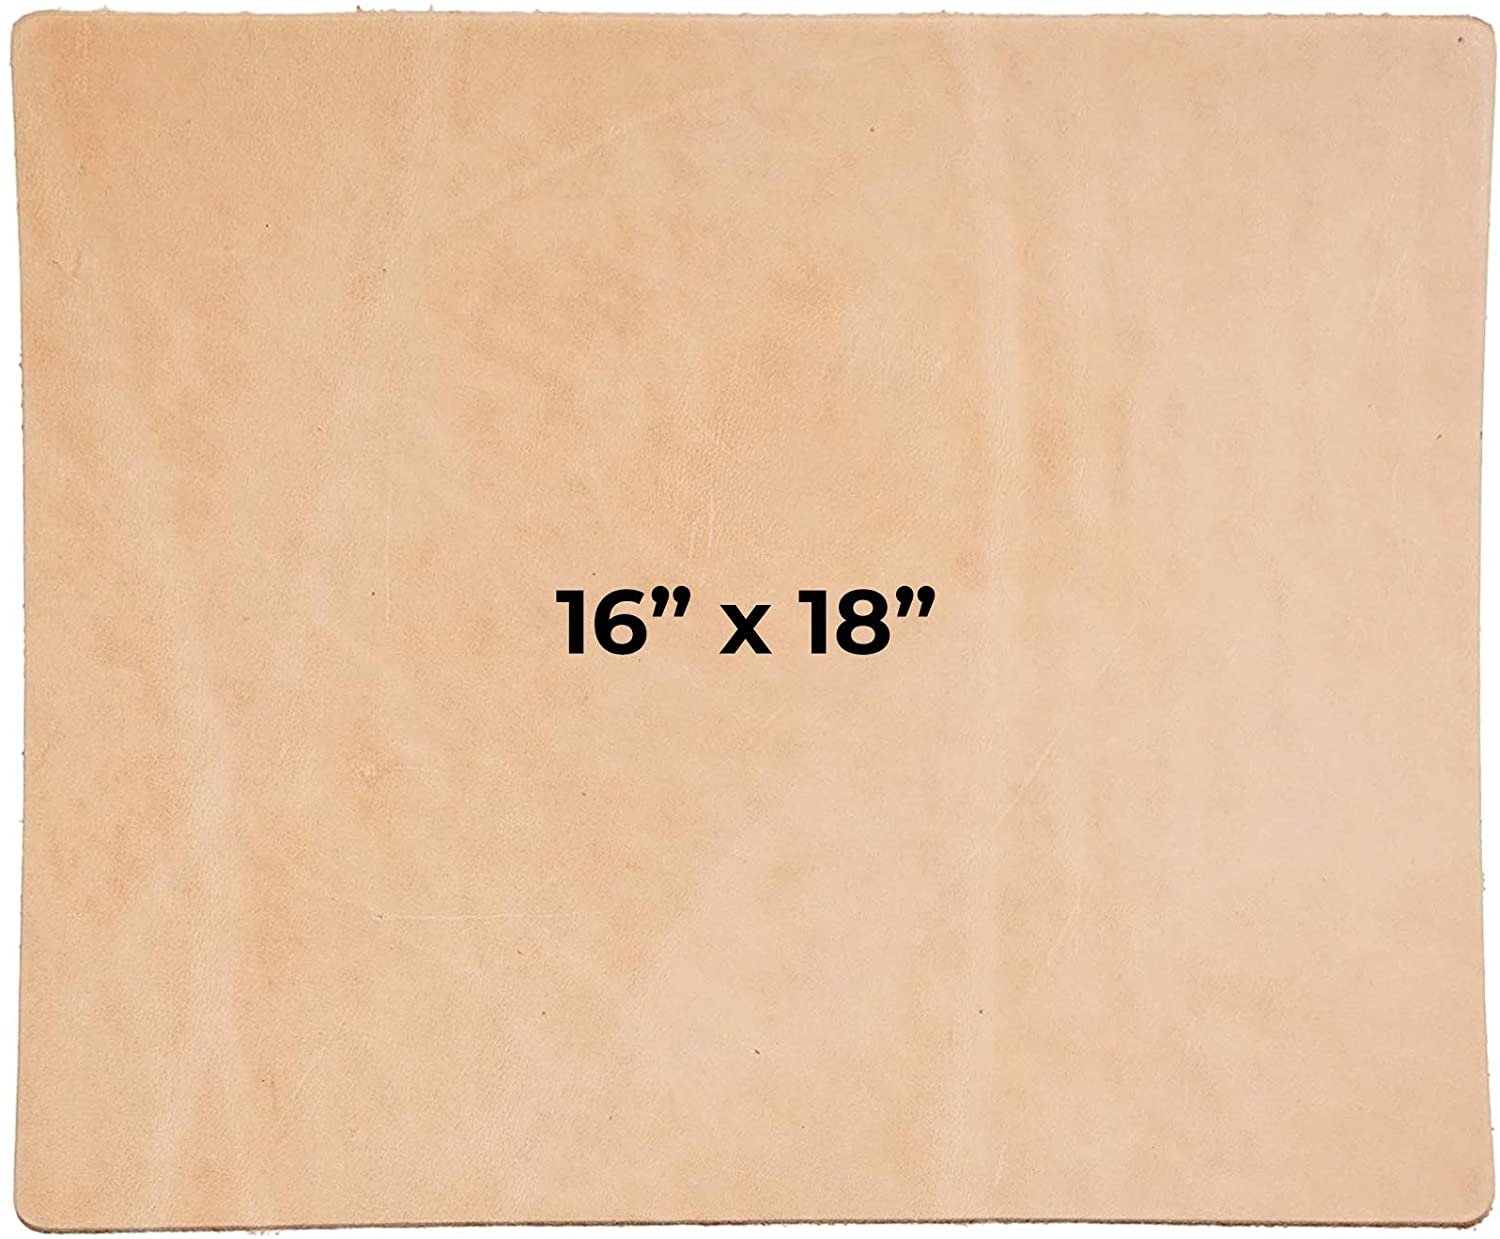 11-12 Oz. 4-4.8mm Vegetable Tanned Leather Blanks Belts/Straps